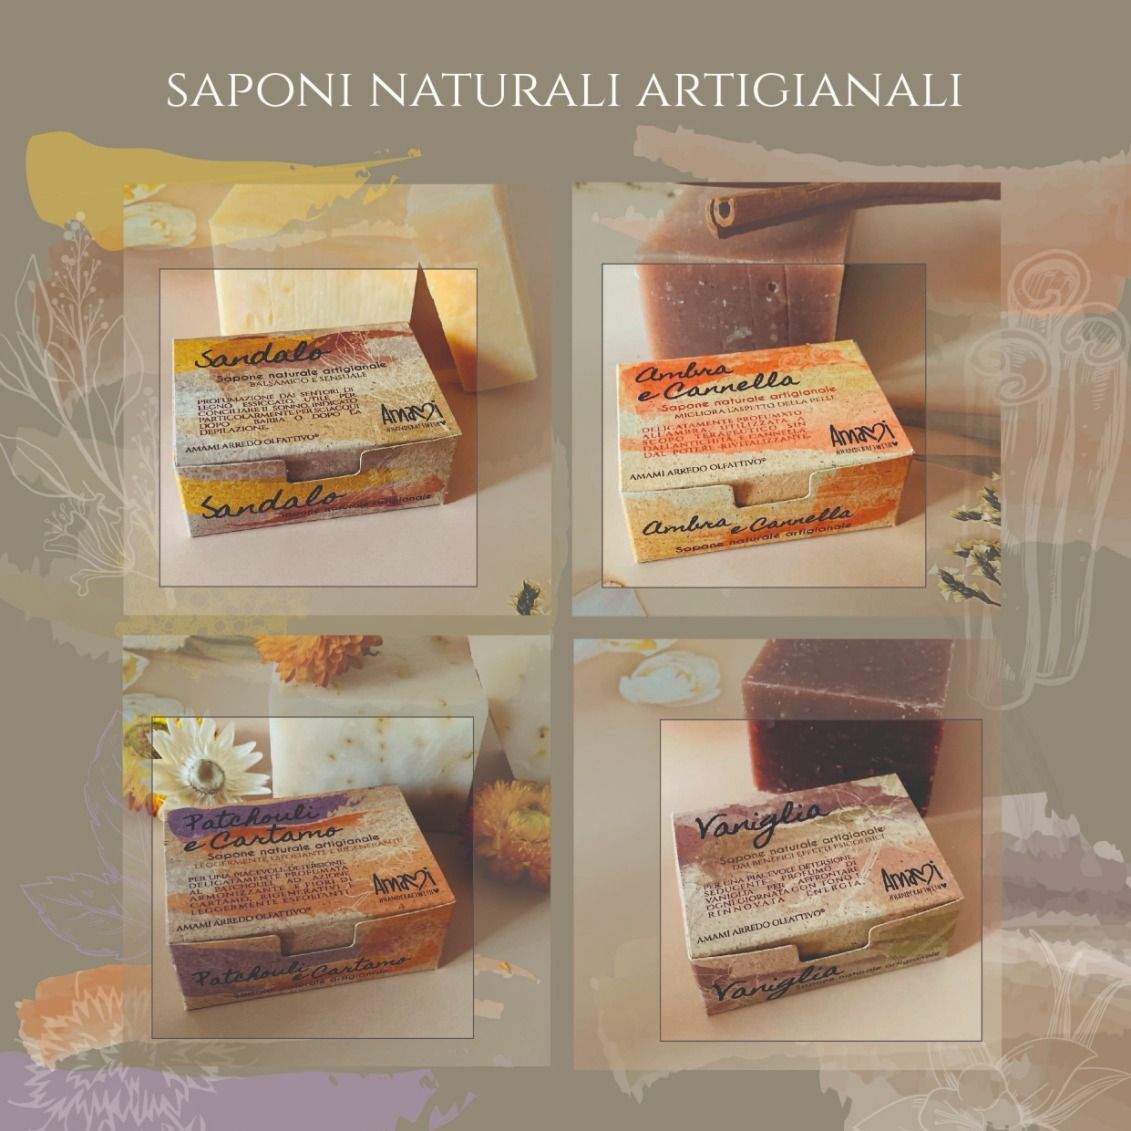 Box 4 Saponi Naturali - Amami Arredo Olfattivo